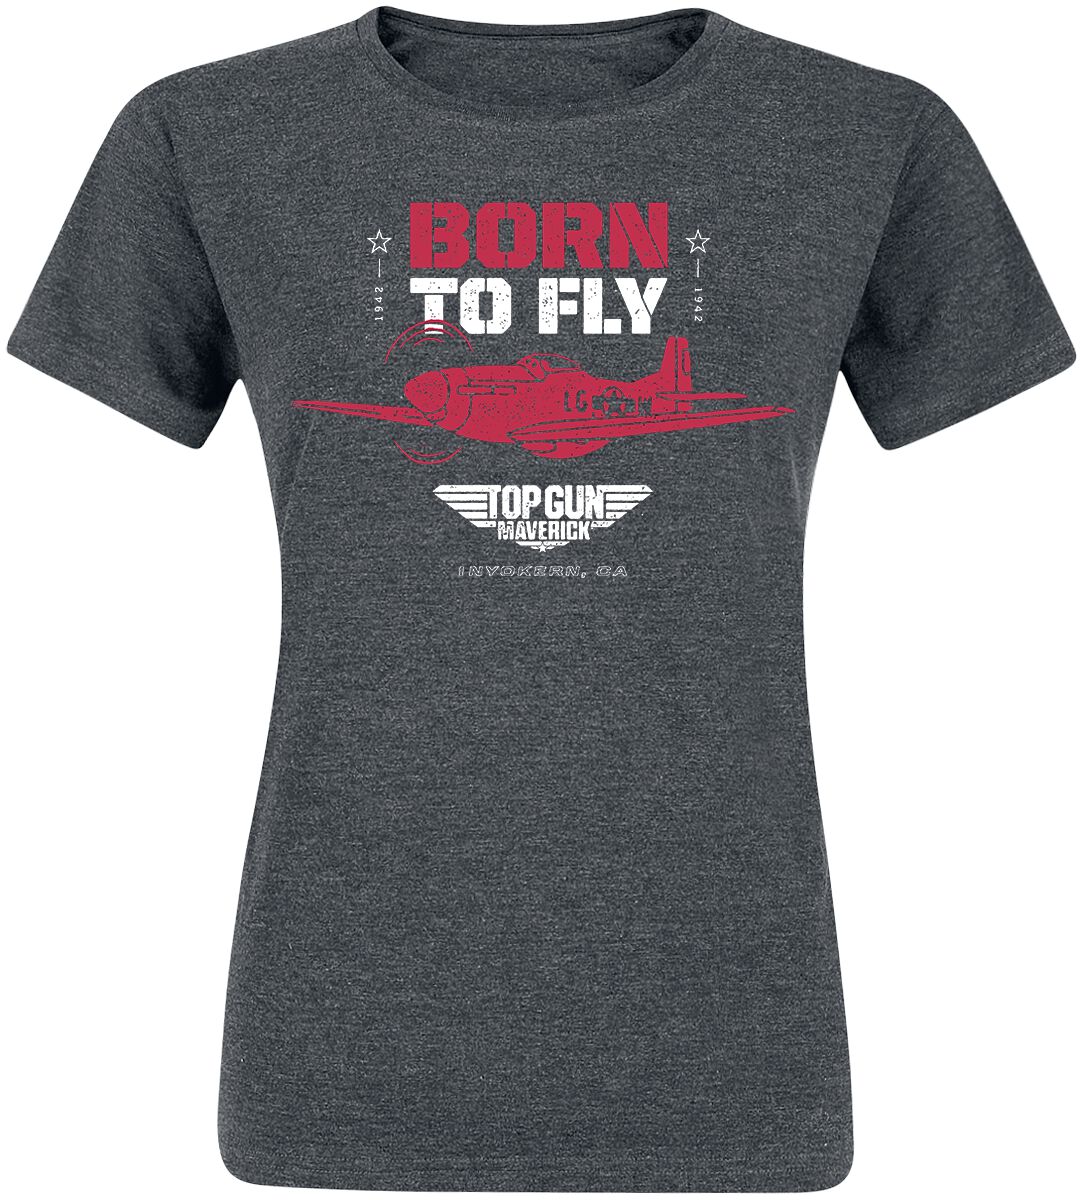 Top Gun Born To Fly T-Shirt grey